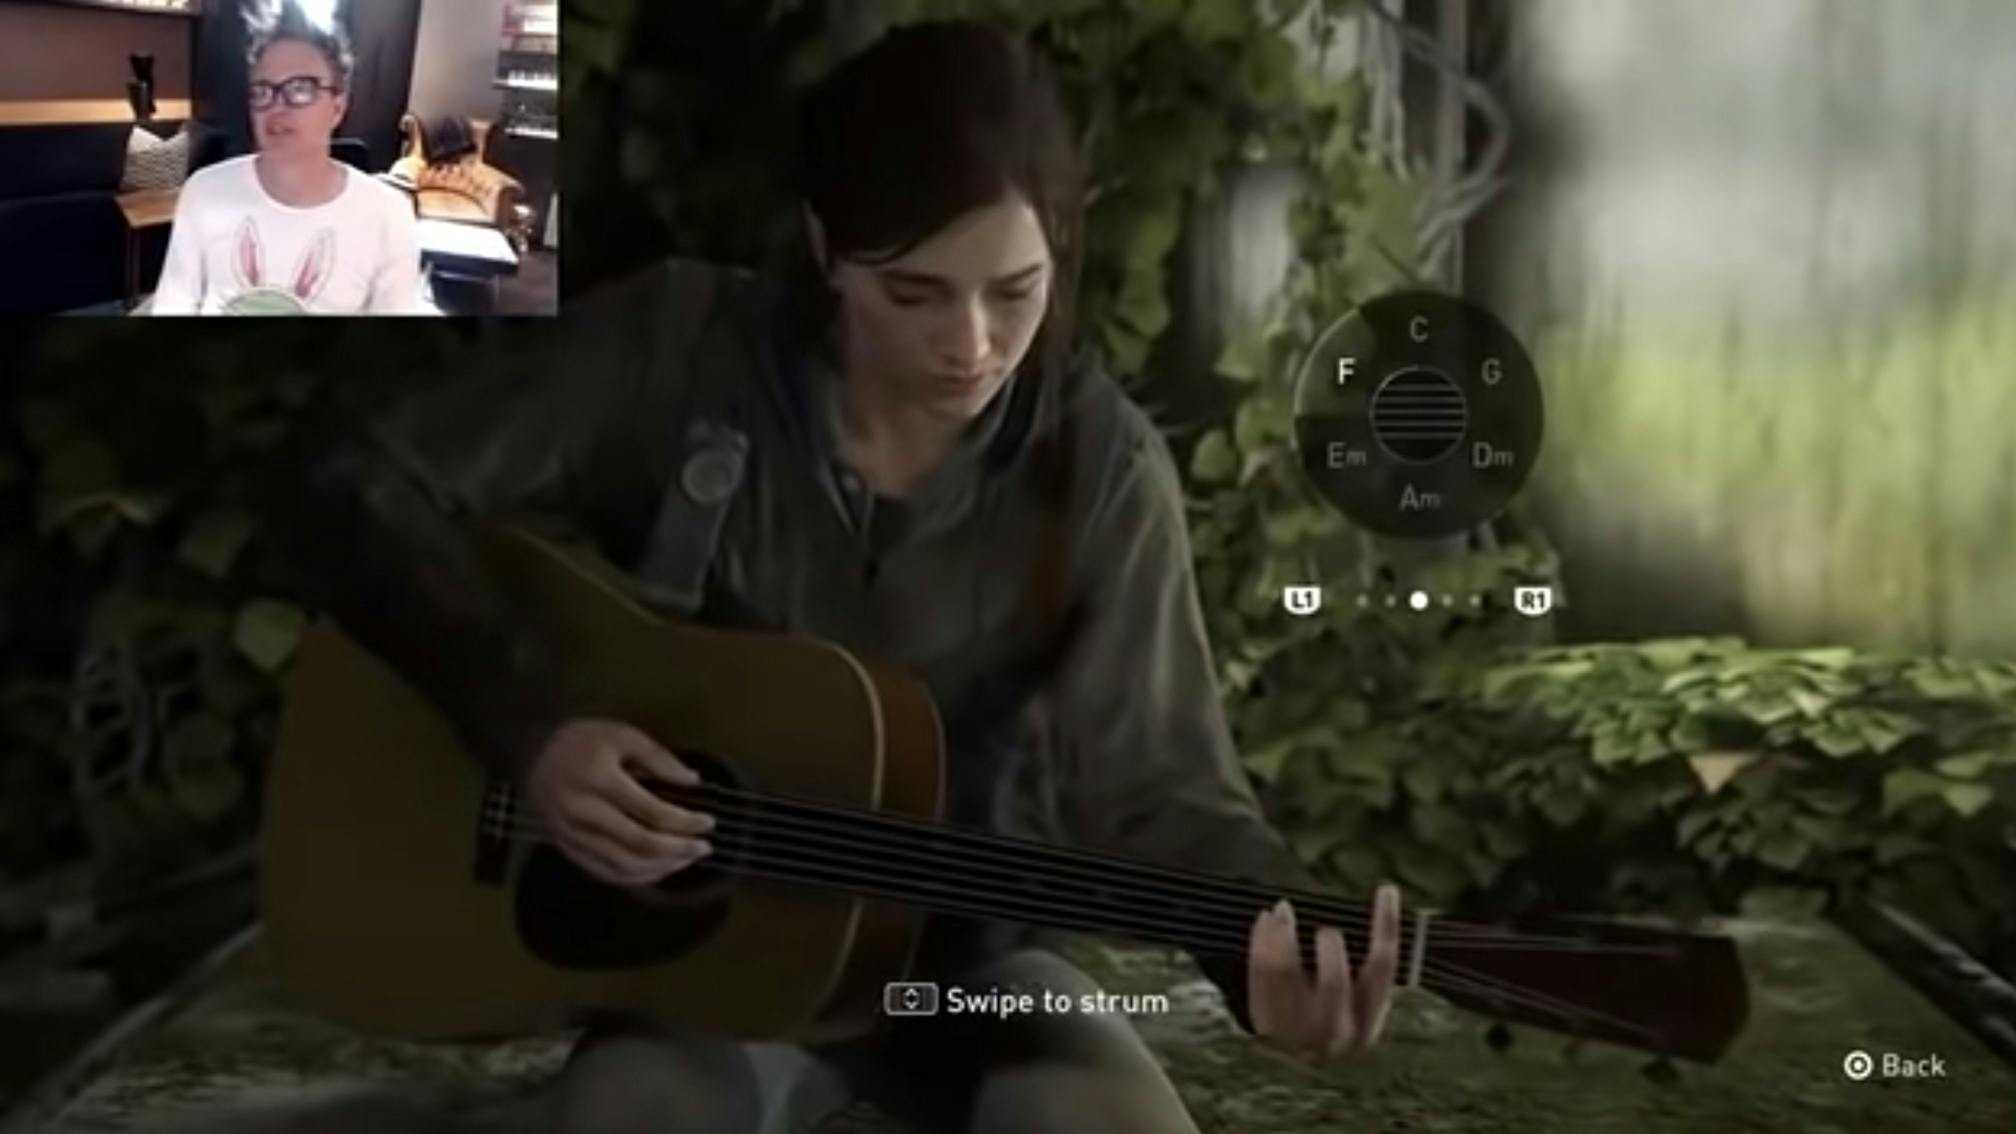 Watch Mark Hoppus Play blink-182’s Dammit In The Last Of Us Part II